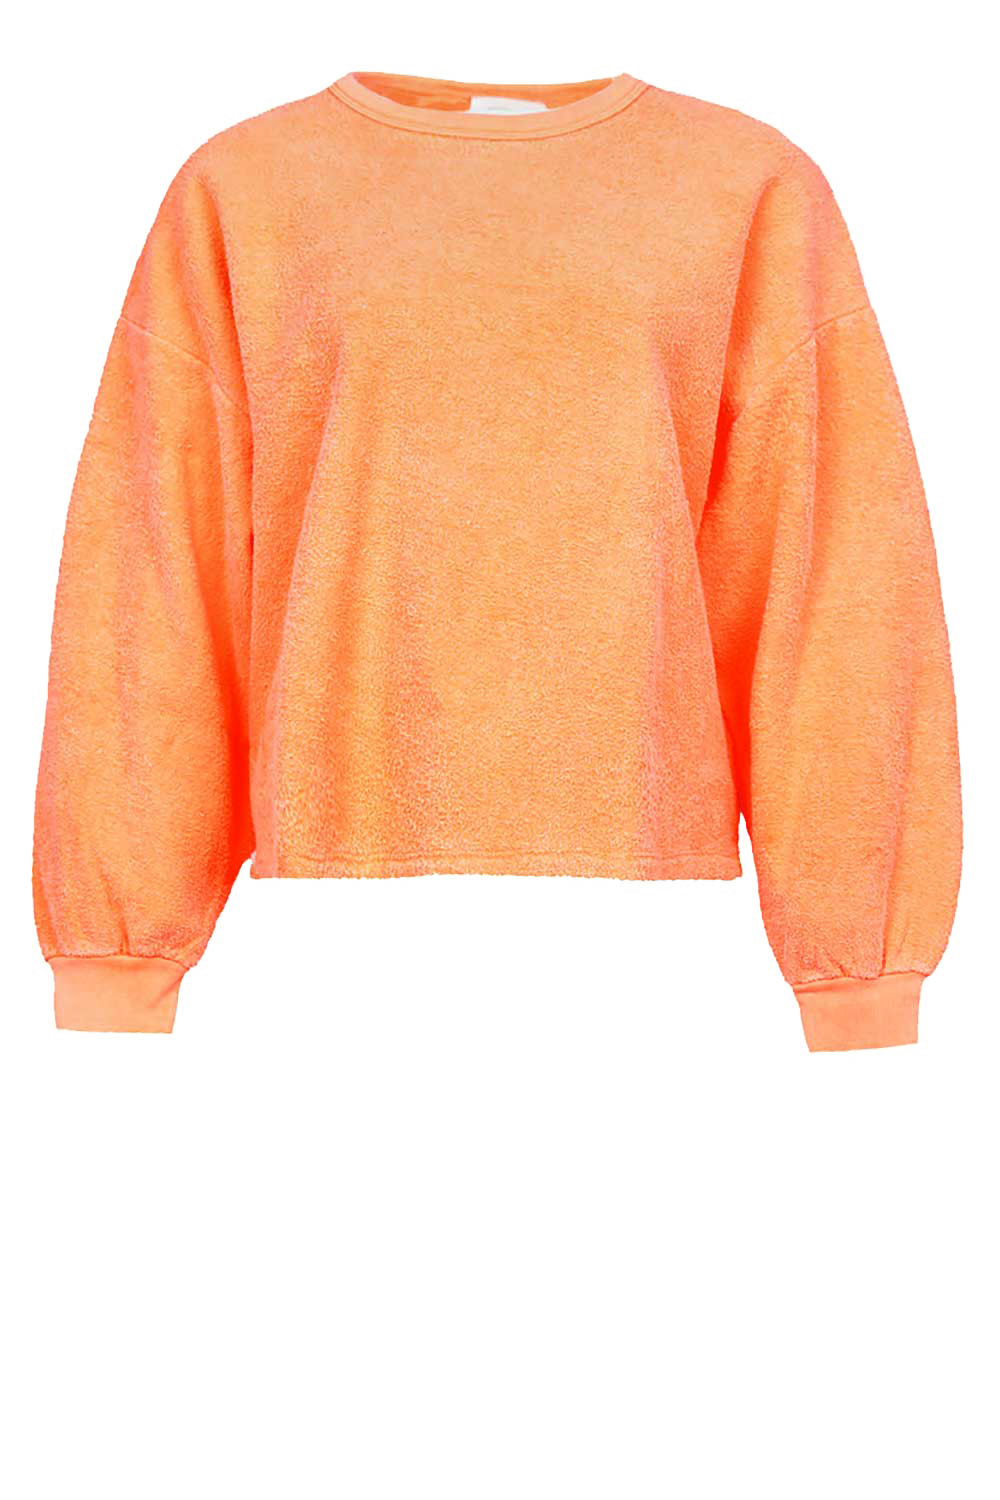 American vintage Washed teddy sweater Bobypark oranje